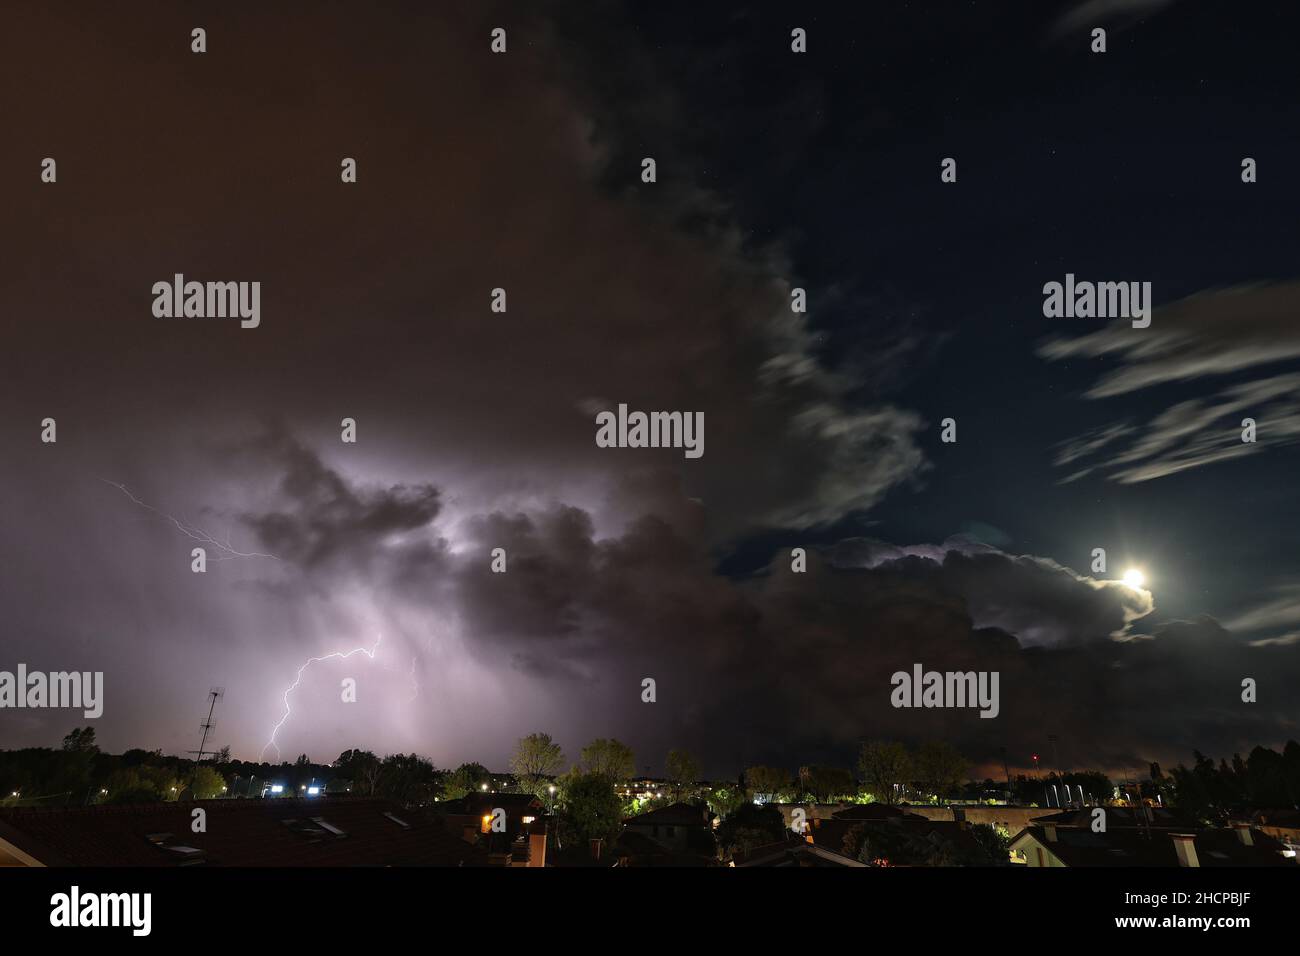 Lightning strikes during a thunderstorm Stock Photo